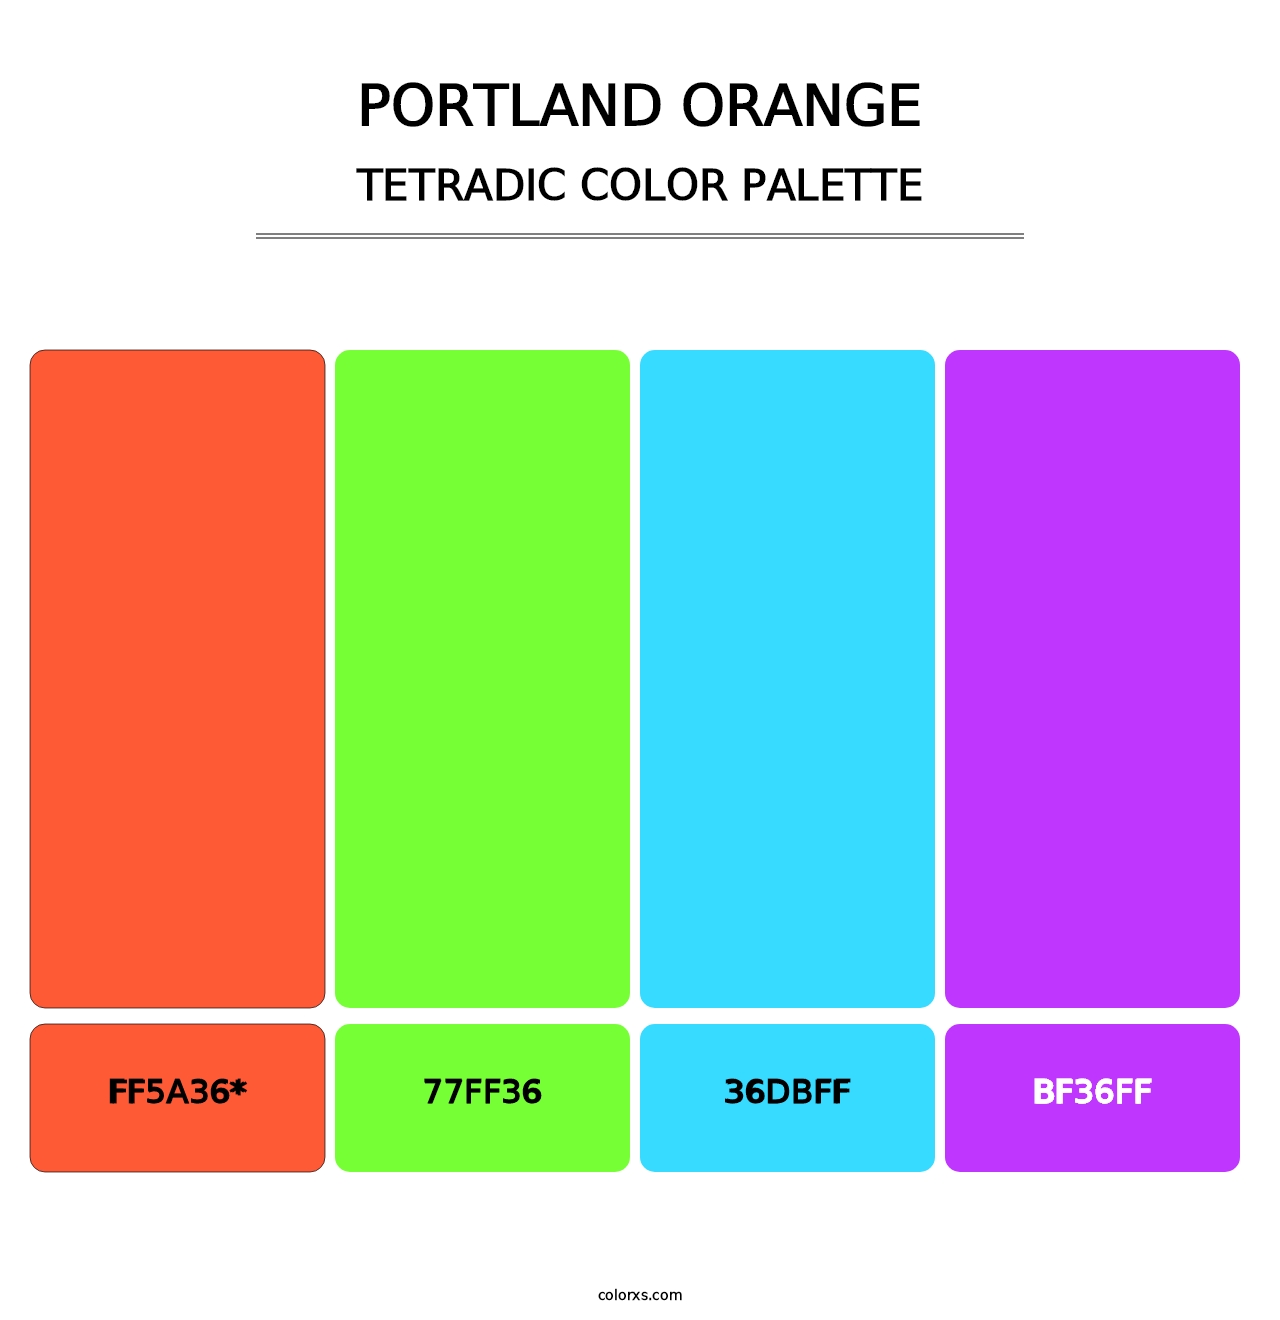 Portland Orange - Tetradic Color Palette